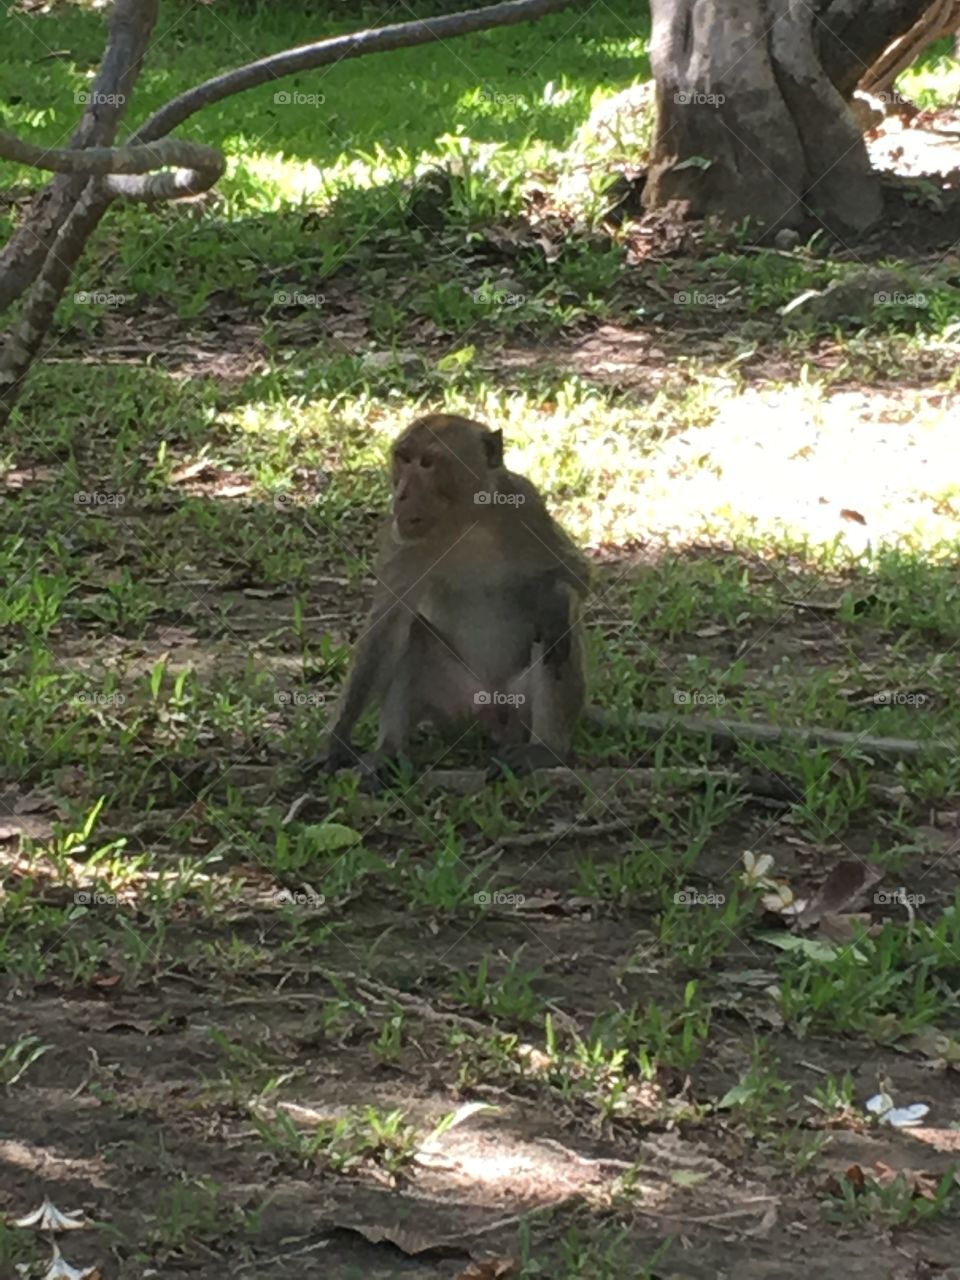 Naughty monkey 